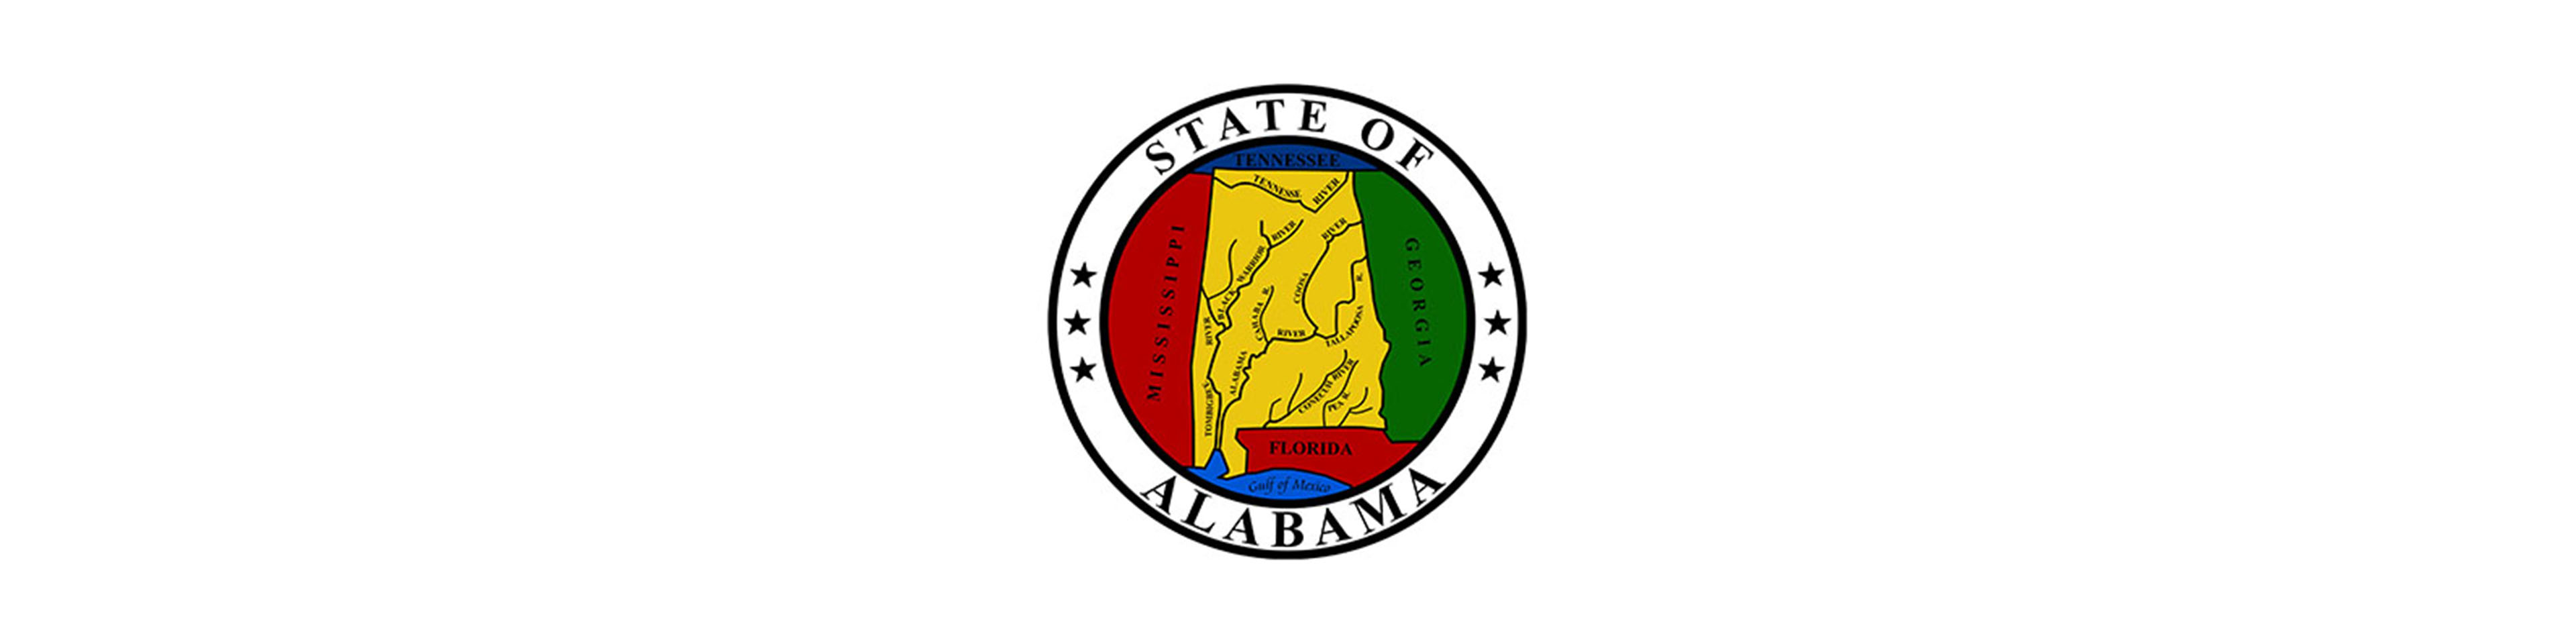 Alabama Enacts New Corporation Law